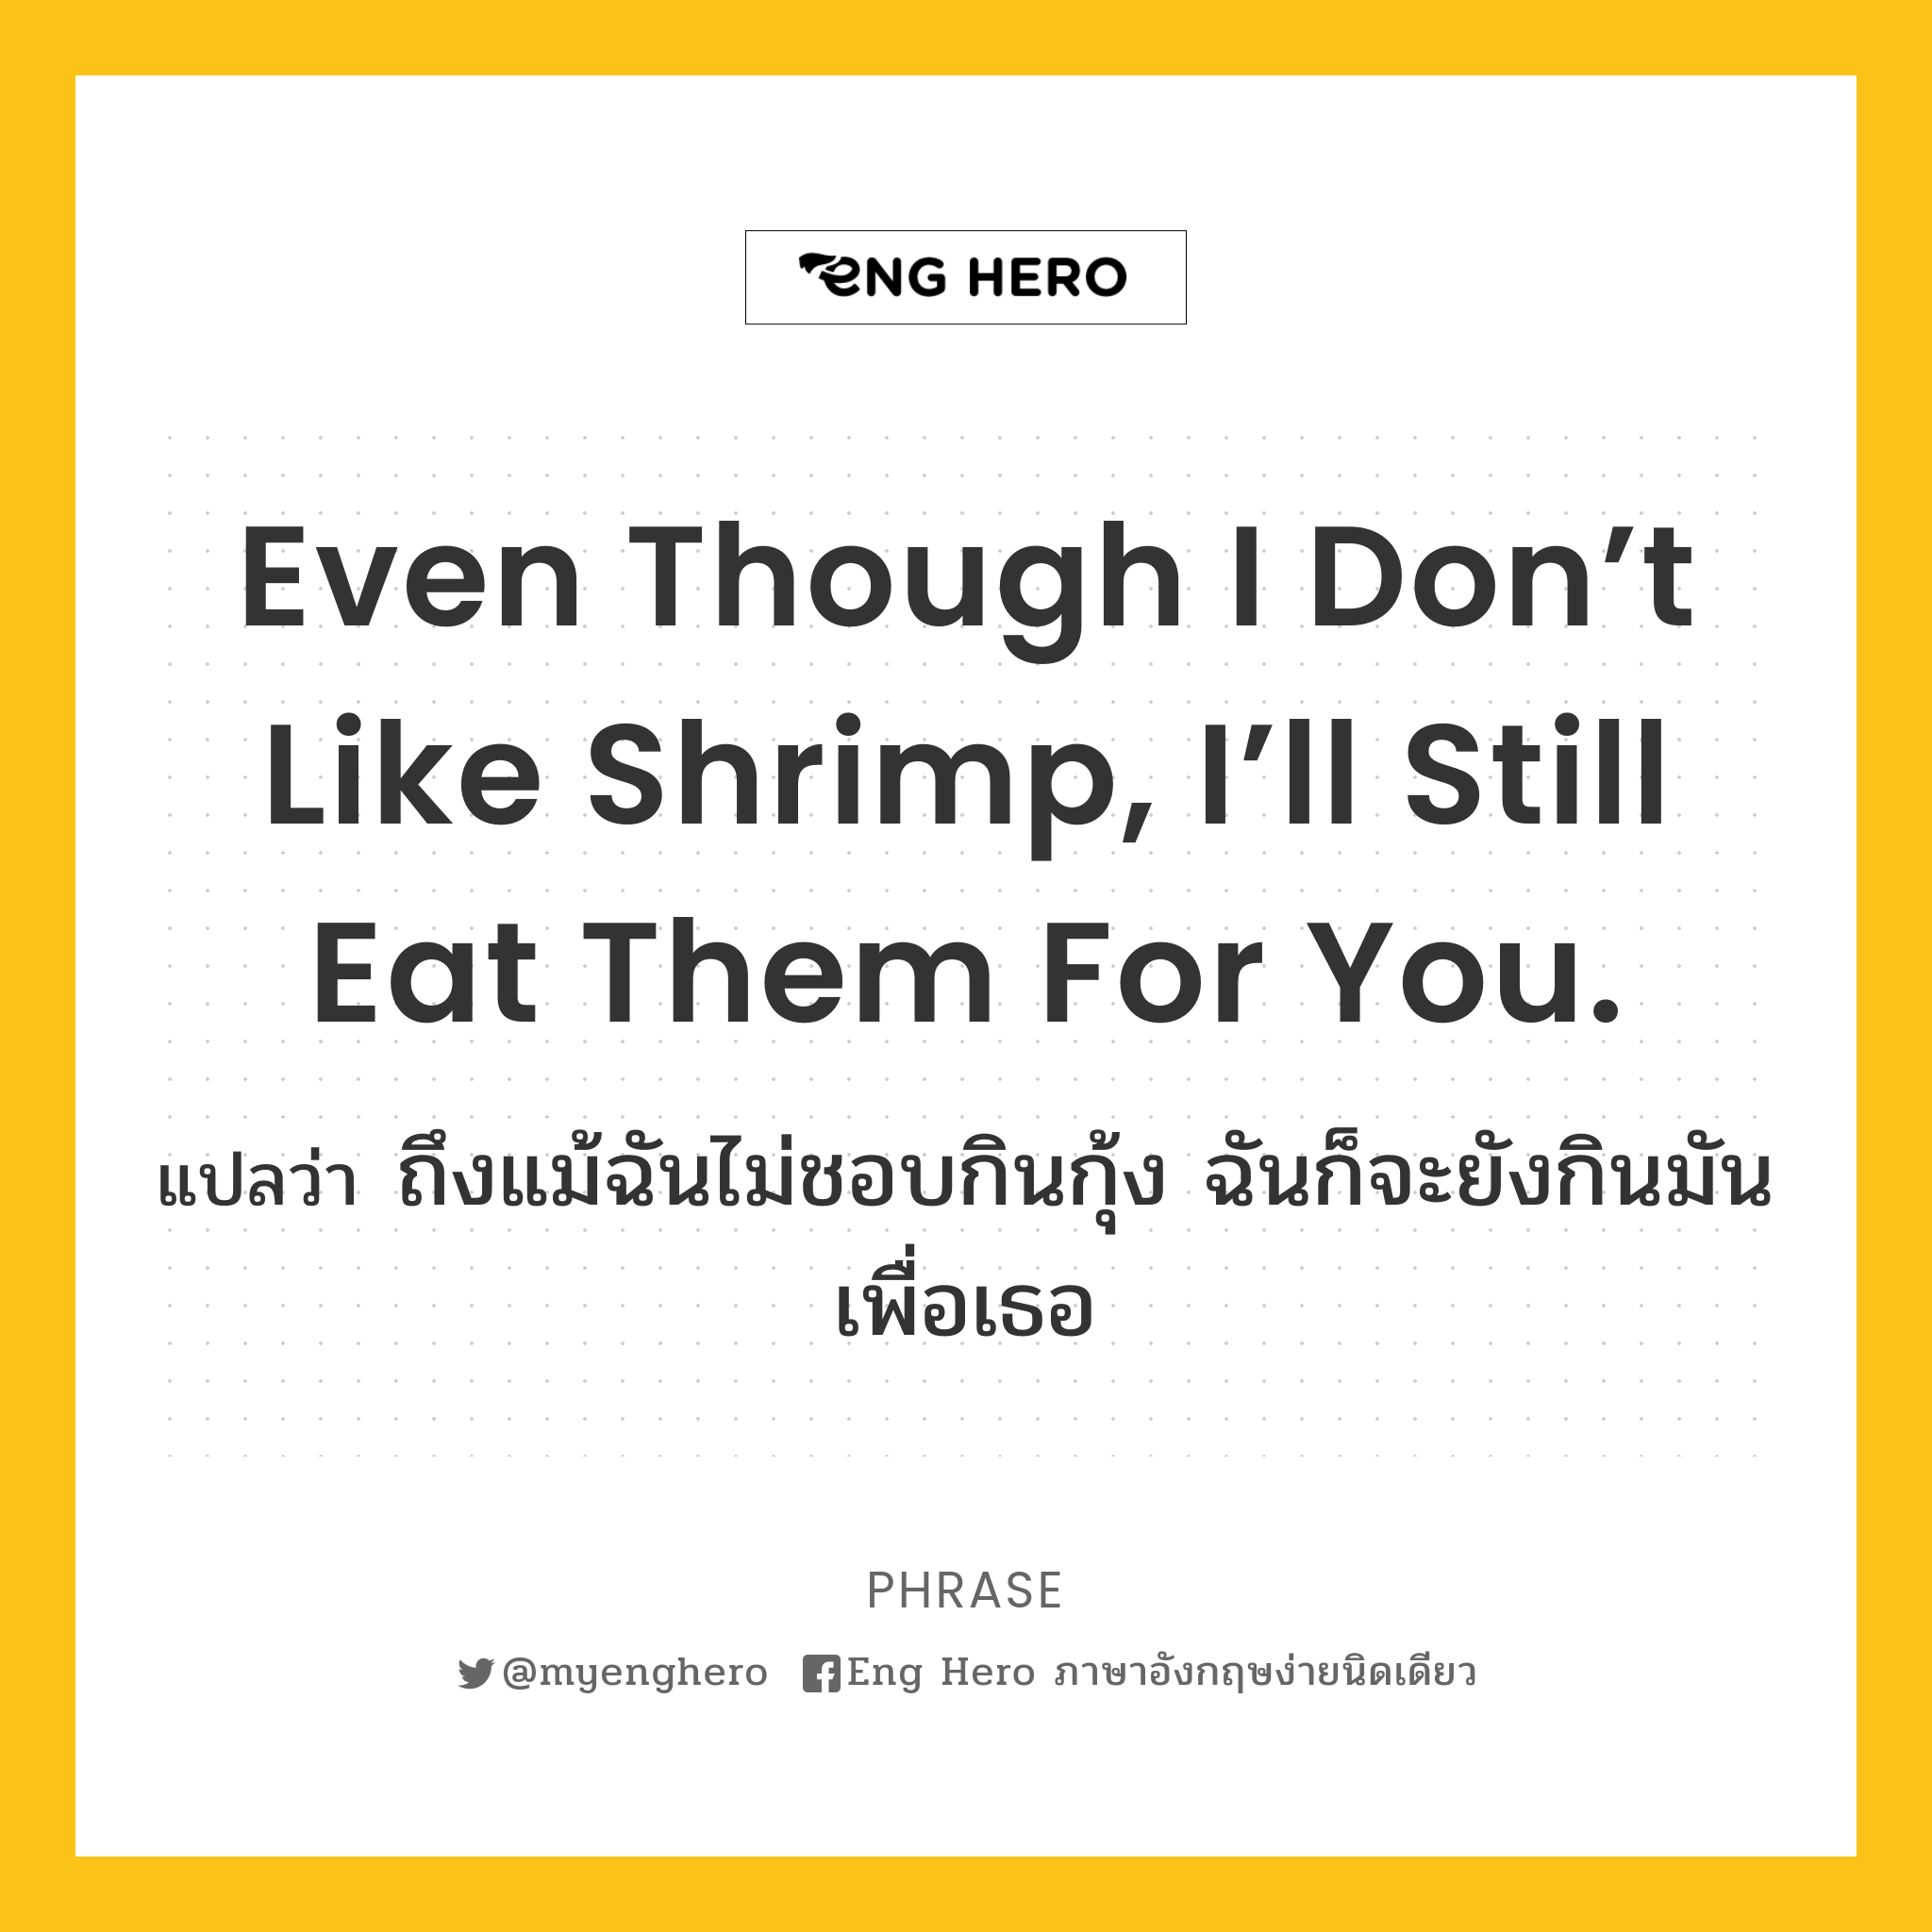 Even though I don’t like shrimp, I’ll still eat them for you.